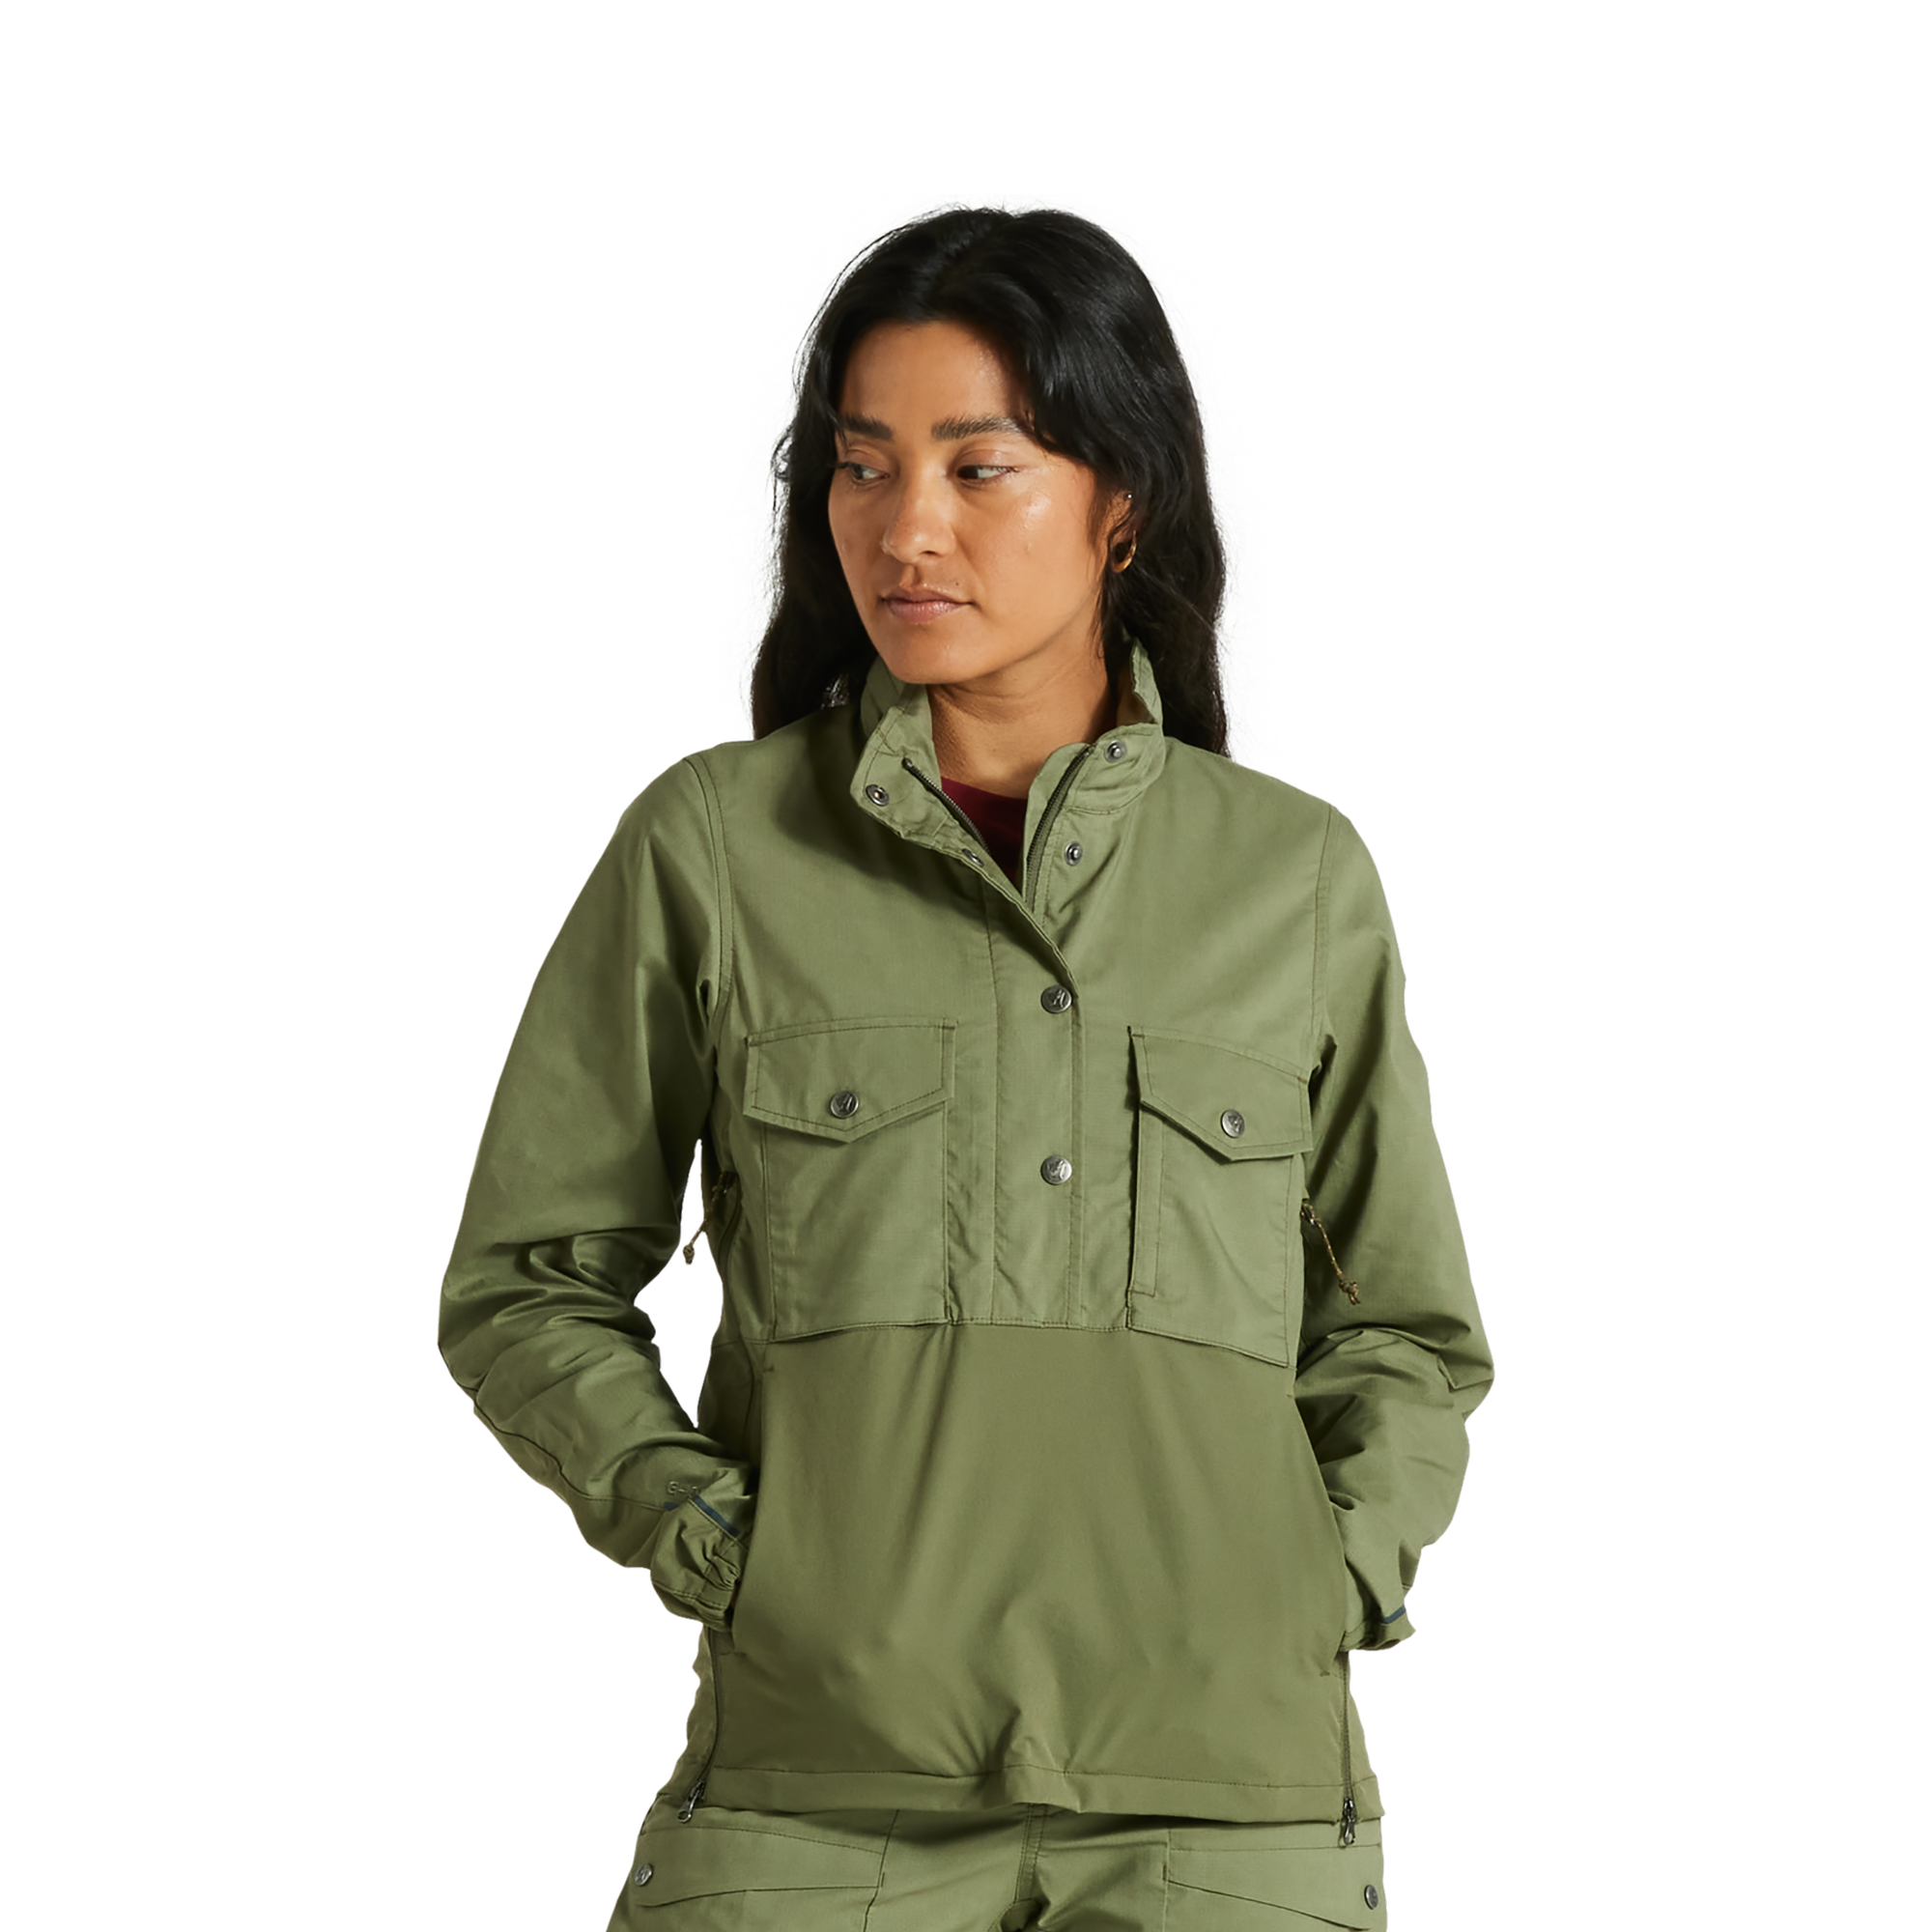 Women's Specialized/Fjallraven Rider's Wind Jacket